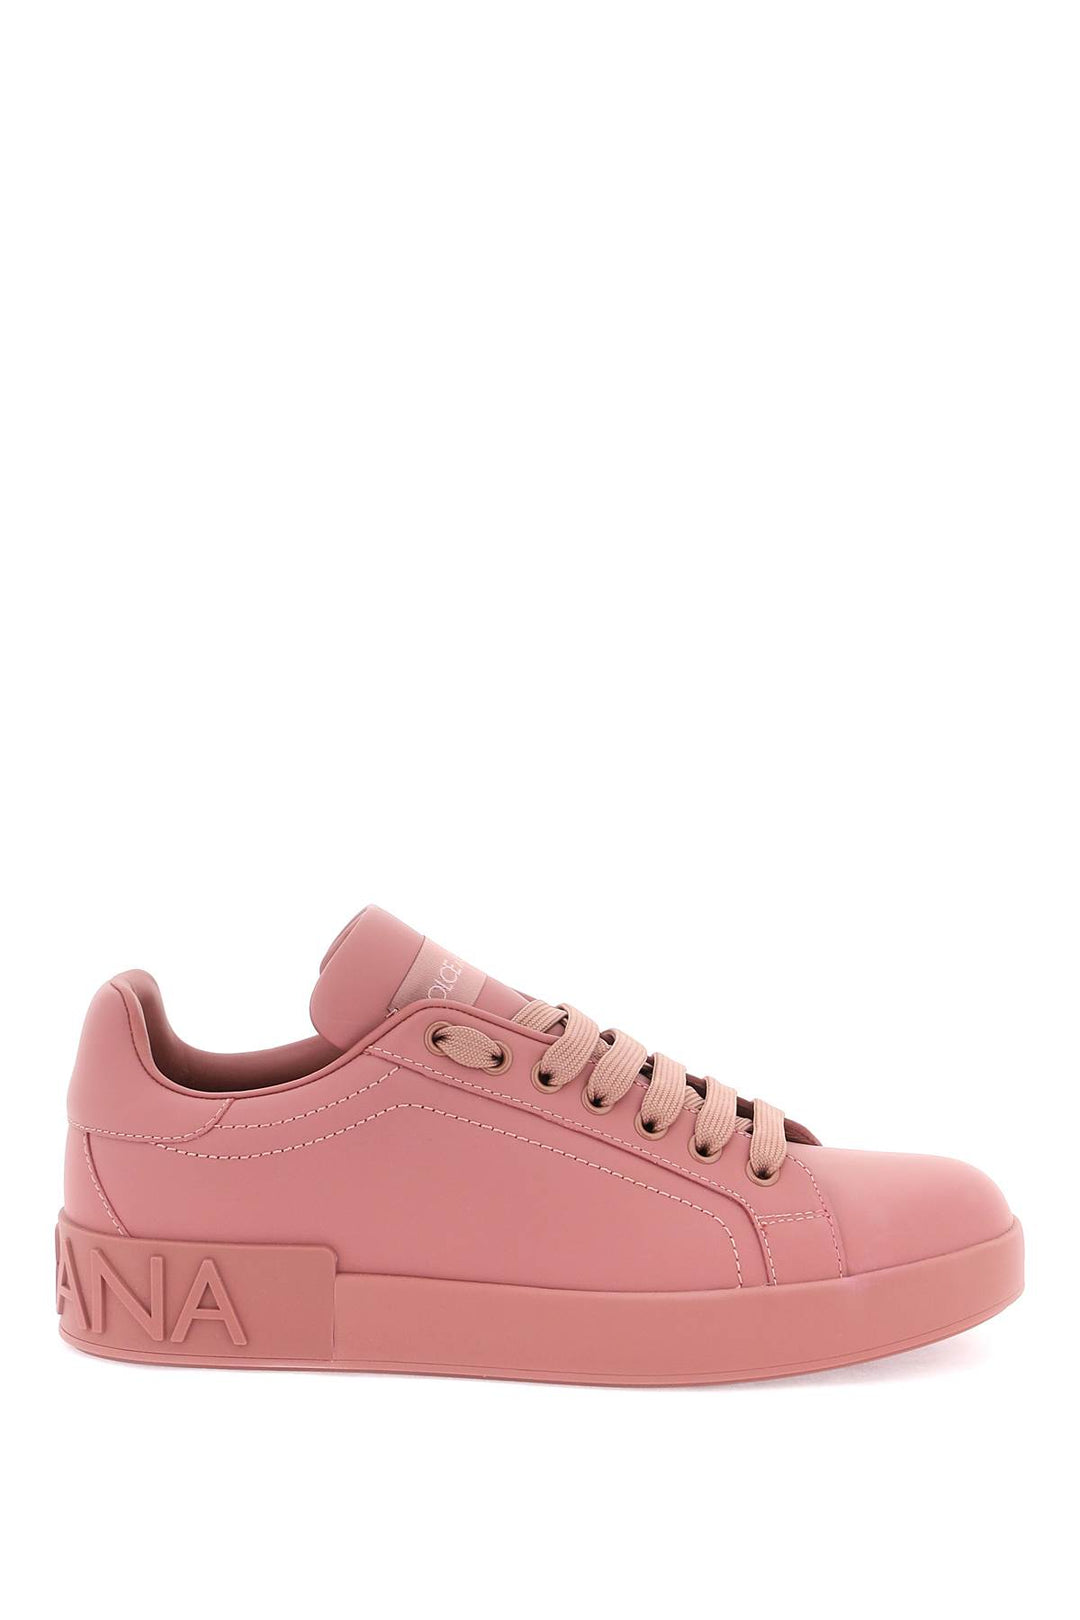 Dolce & Gabbana Portofino Sneakers   Pink